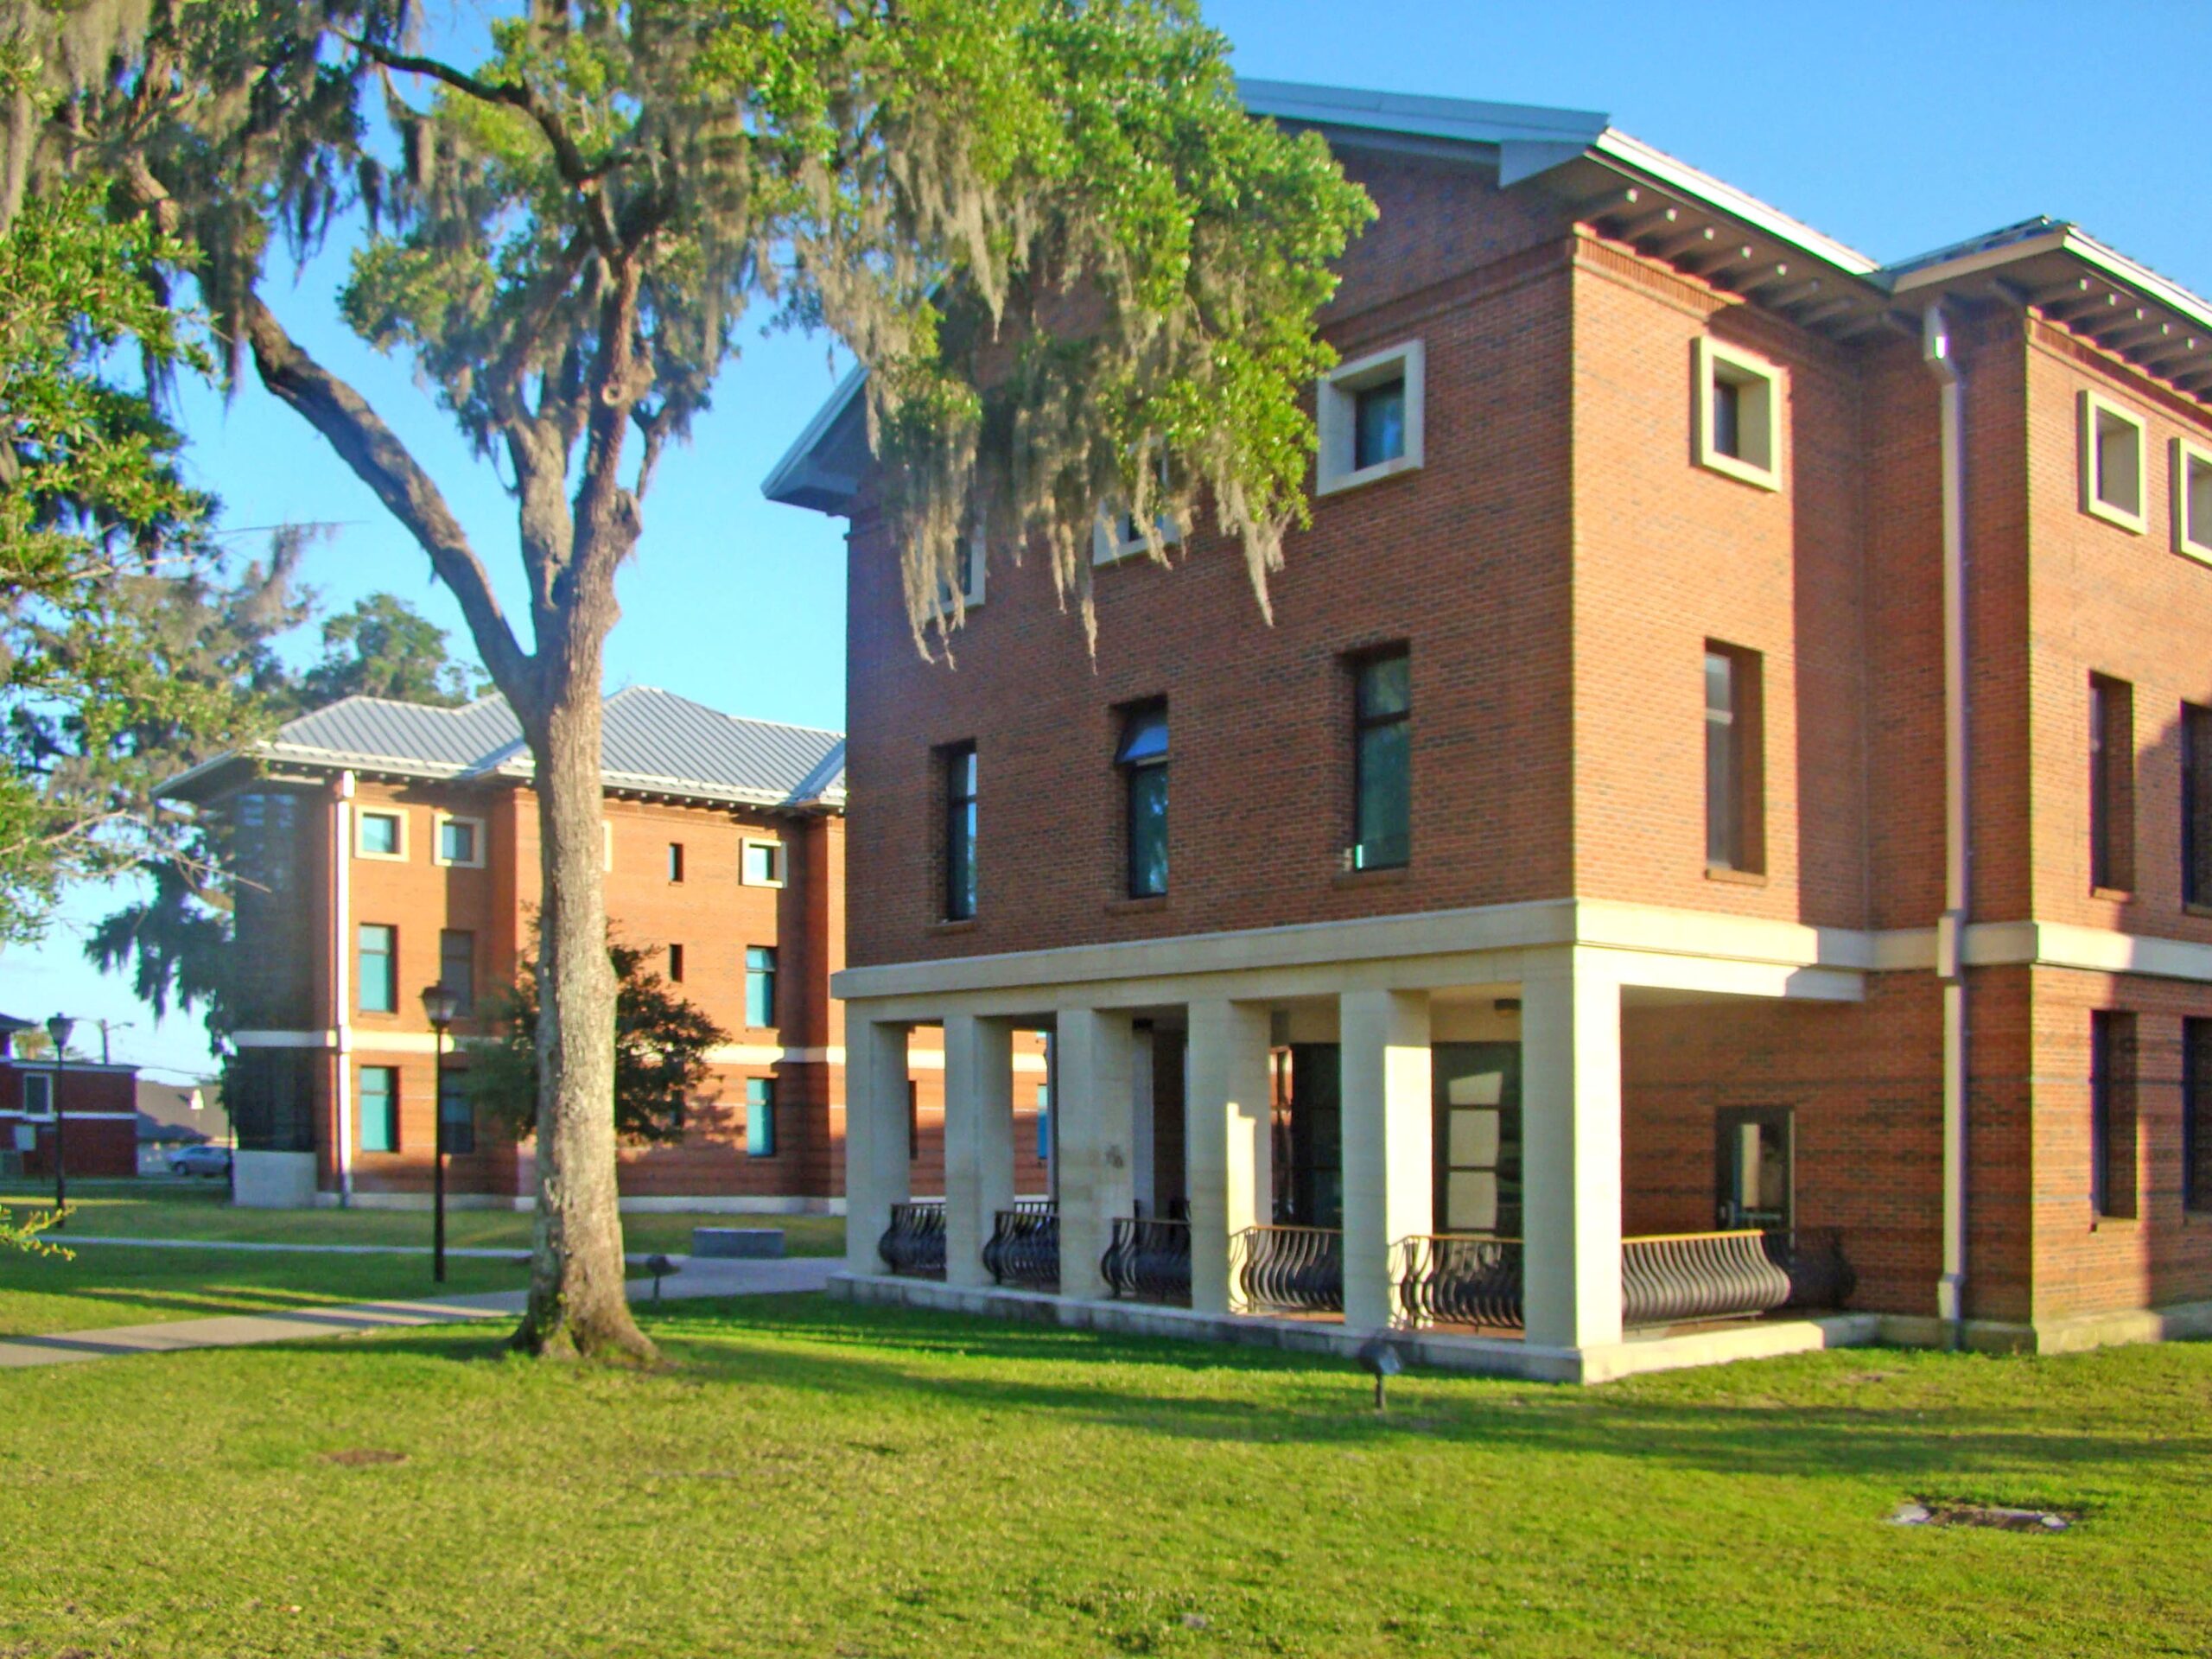 Savannah State University Living Learning Center Goode Van Slyke Architecture